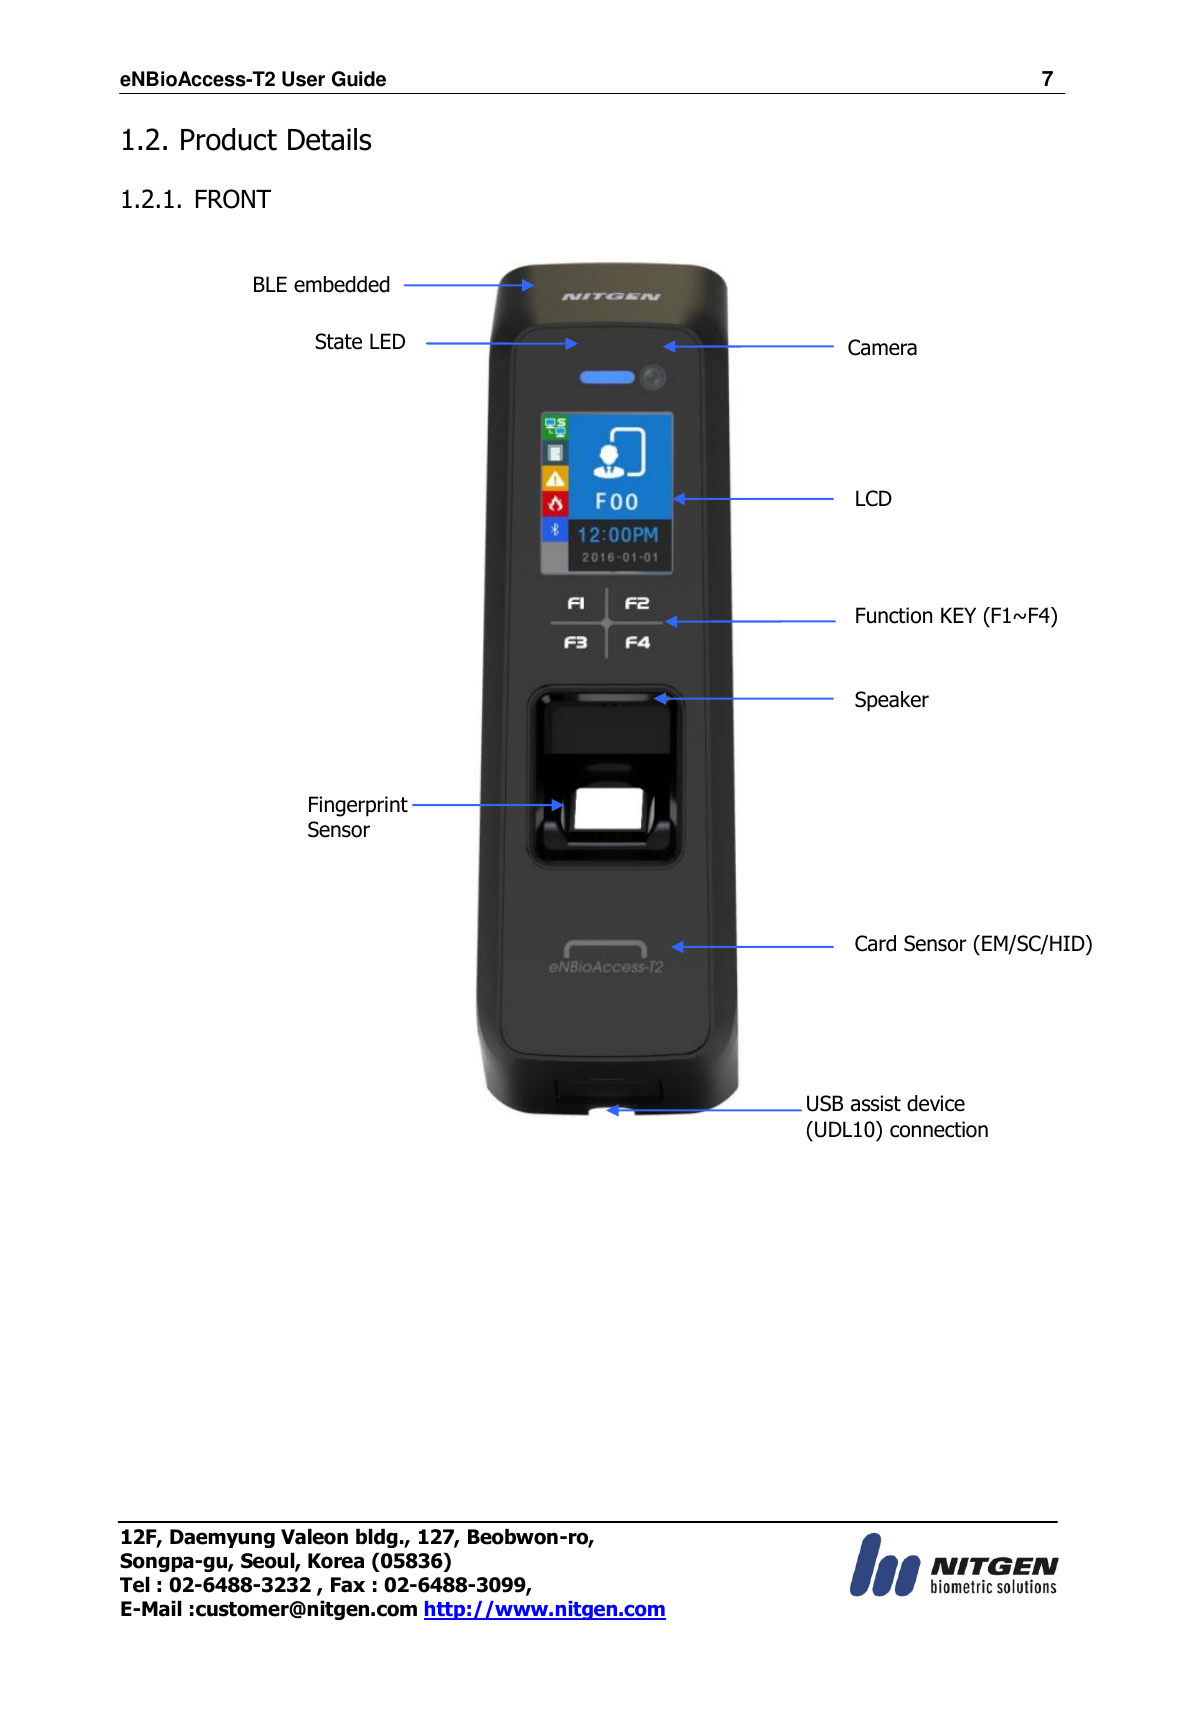 eNBioAccess-T2 User Guide                                                                    7 12F, Daemyung Valeon bldg., 127, Beobwon-ro, Songpa-gu, Seoul, Korea (05836) Tel : 02-6488-3232 , Fax : 02-6488-3099,   E-Mail :customer@nitgen.com http://www.nitgen.com  1.2. Product Details  1.2.1. FRONT                                 Camera  LCD Function KEY (F1~F4) Speaker  Card Sensor (EM/SC/HID) Fingerprint Sensor  State LED BLE embedded  USB assist device   (UDL10) connection  